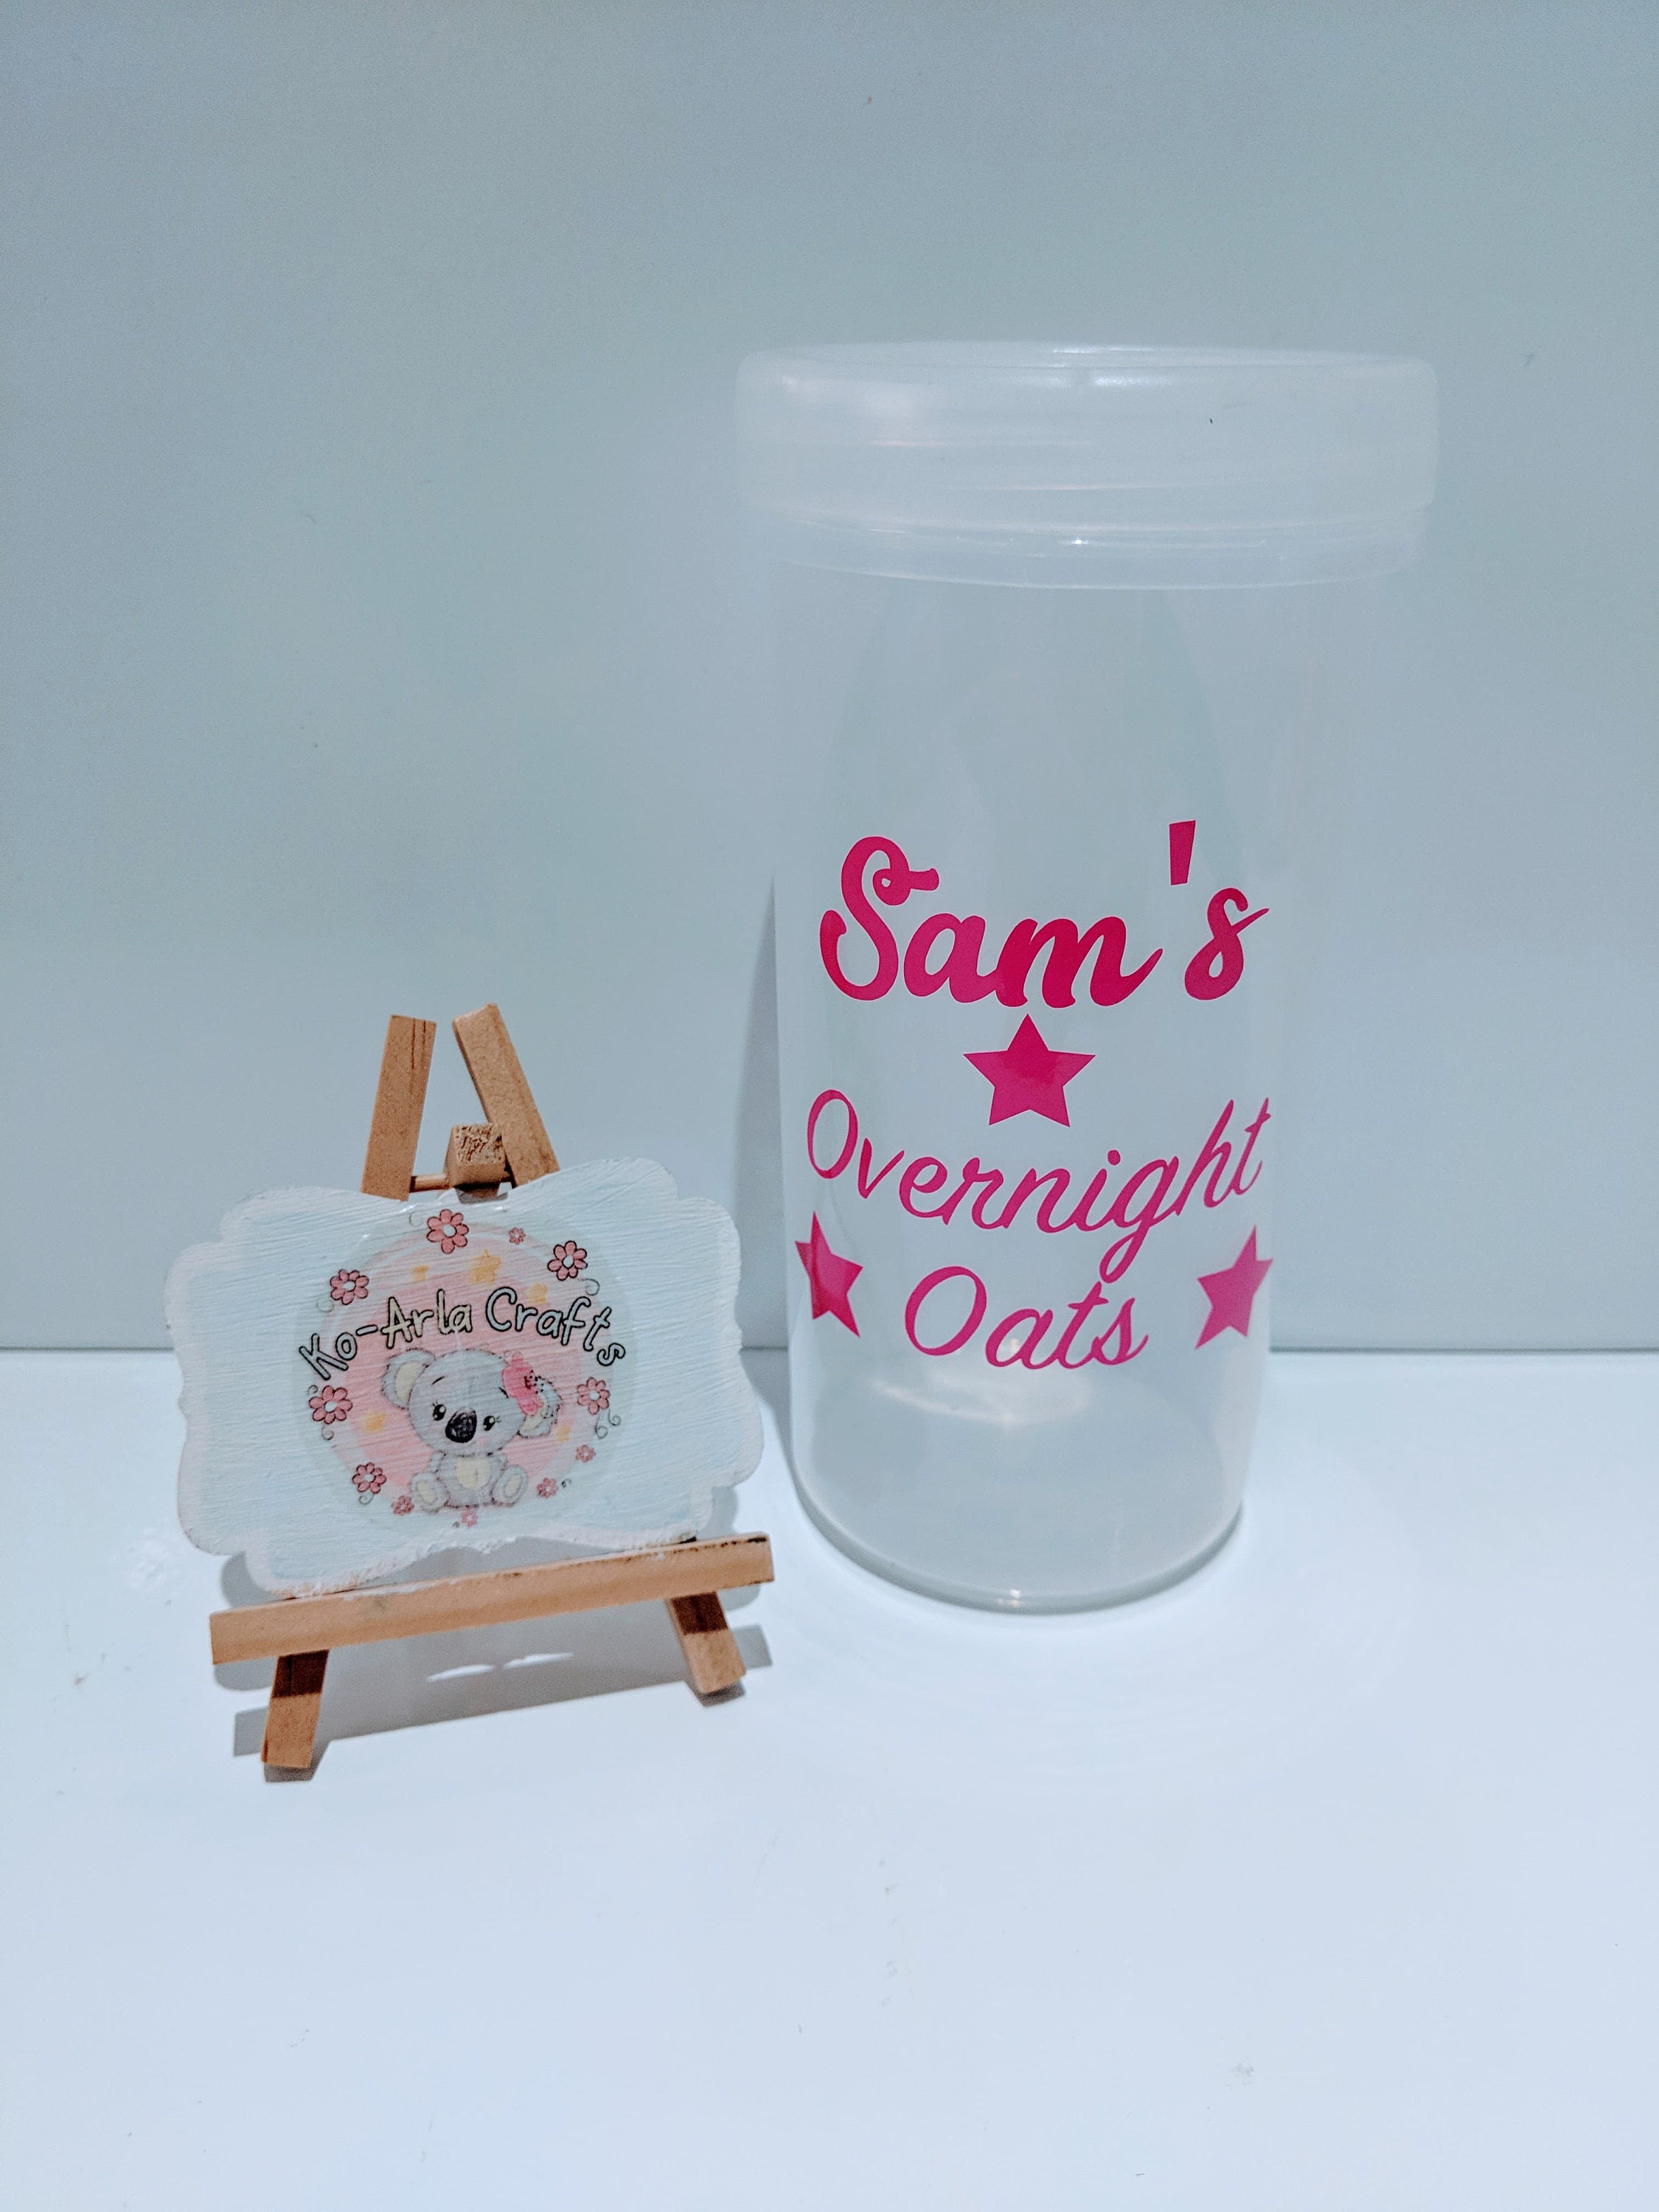 Overnight Oats Jar Personalised Option Mason Jar, Clear Glass Vinyl Decal,  Meal Prep, Breakfast Jar, Personalised Gift slimming World 